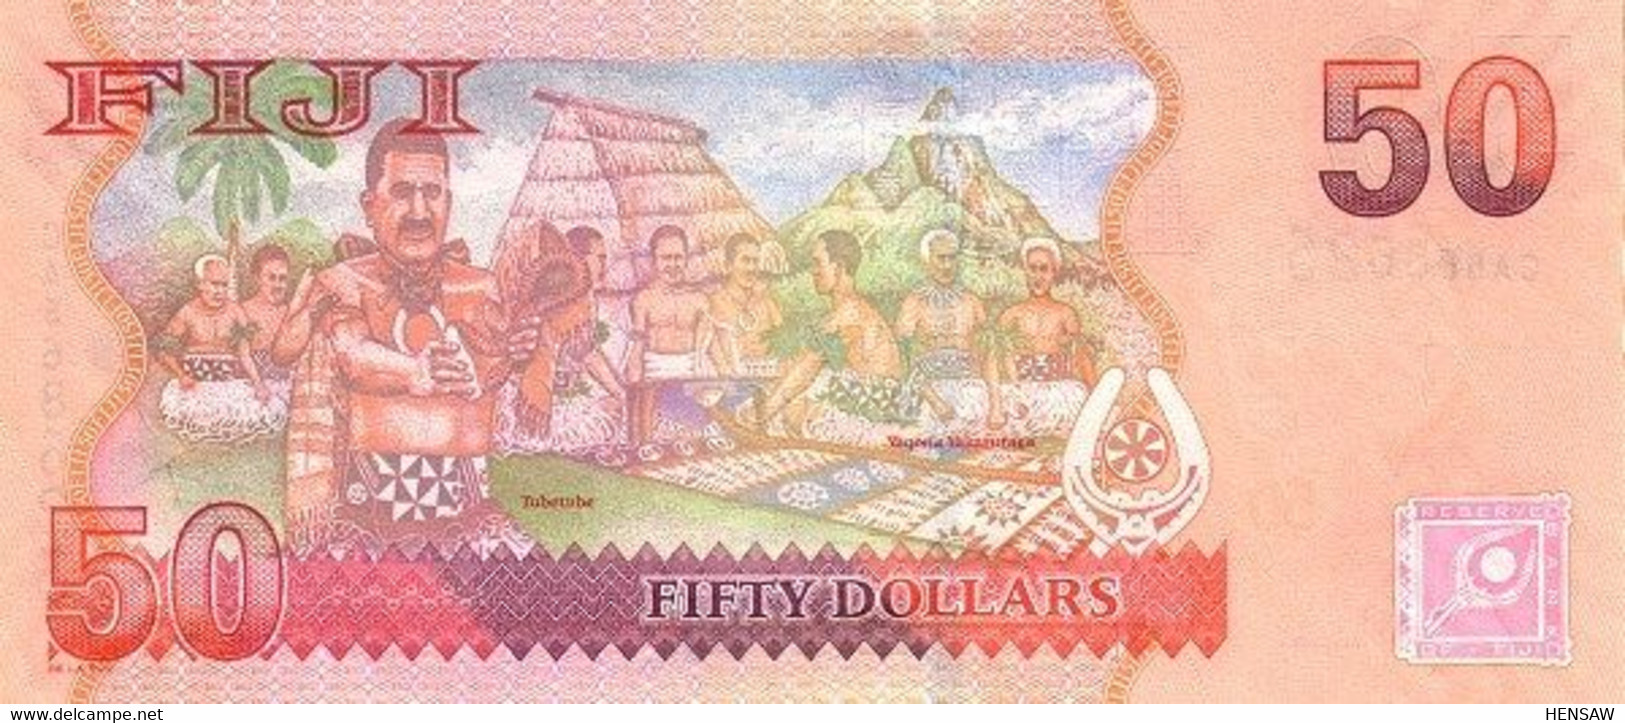 FIJI 50 DOLLARS P 113 2007 UNC SC NUEVO - Fidji